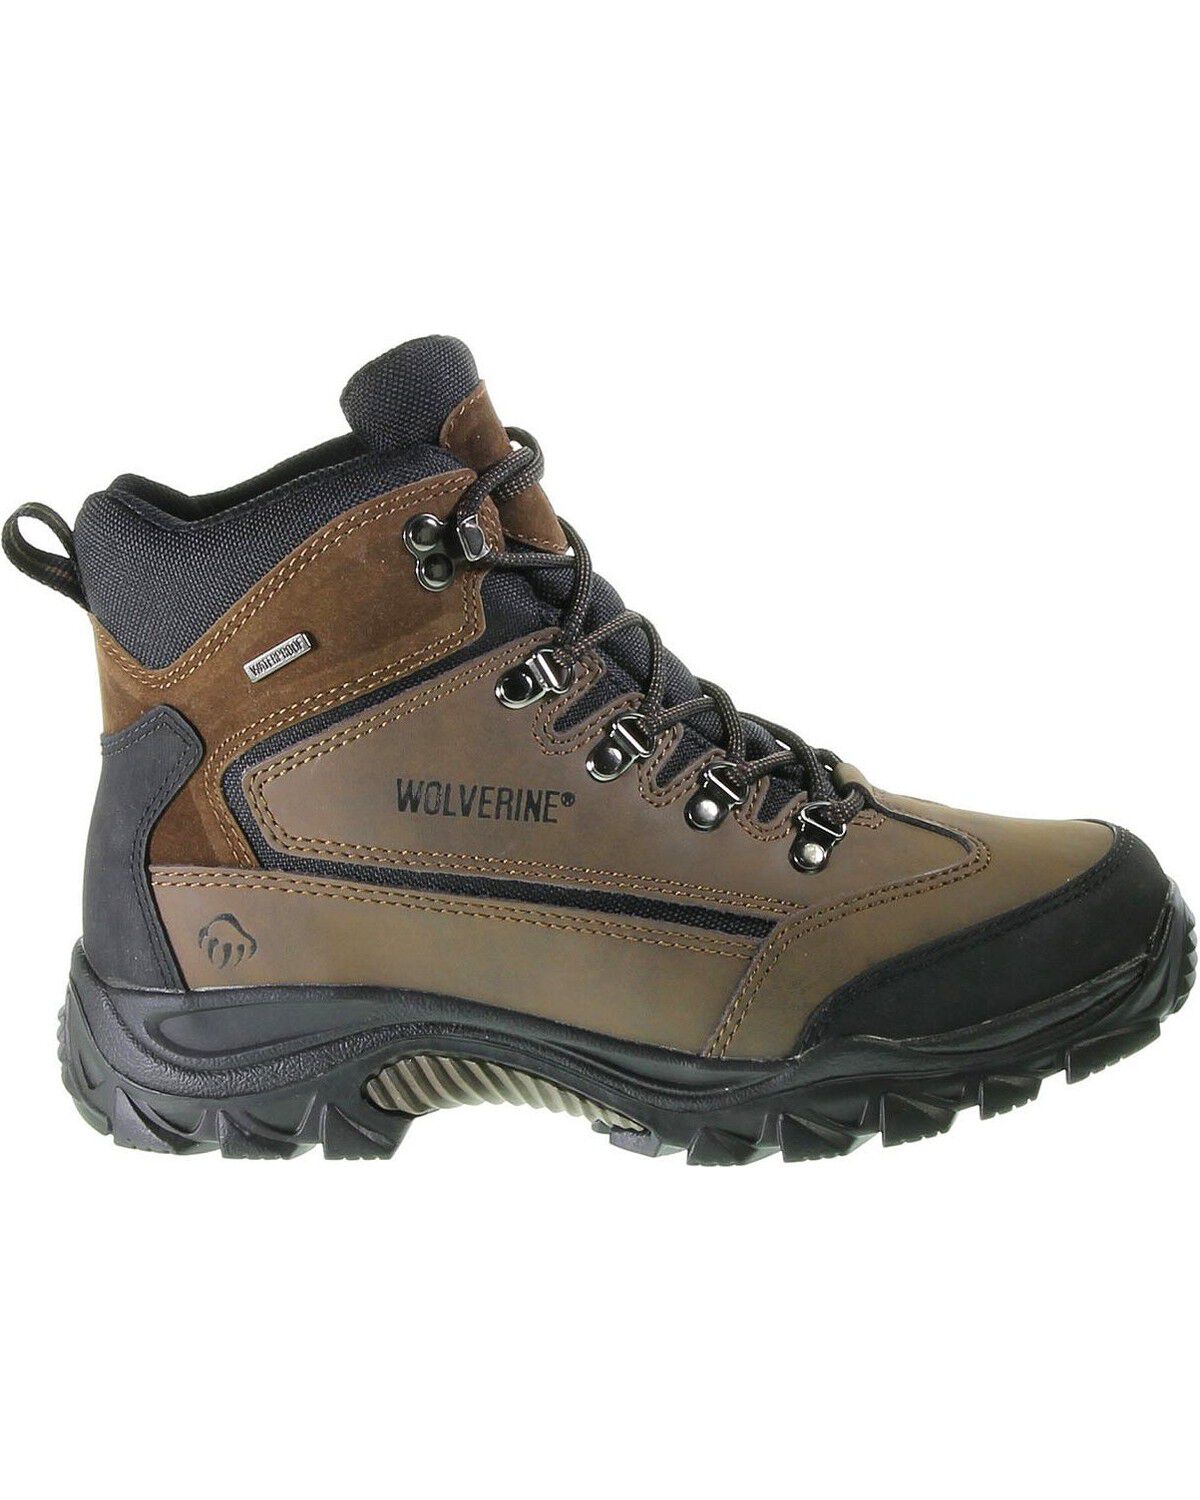 Spencer Waterproof Hiker Boots | Boot Barn